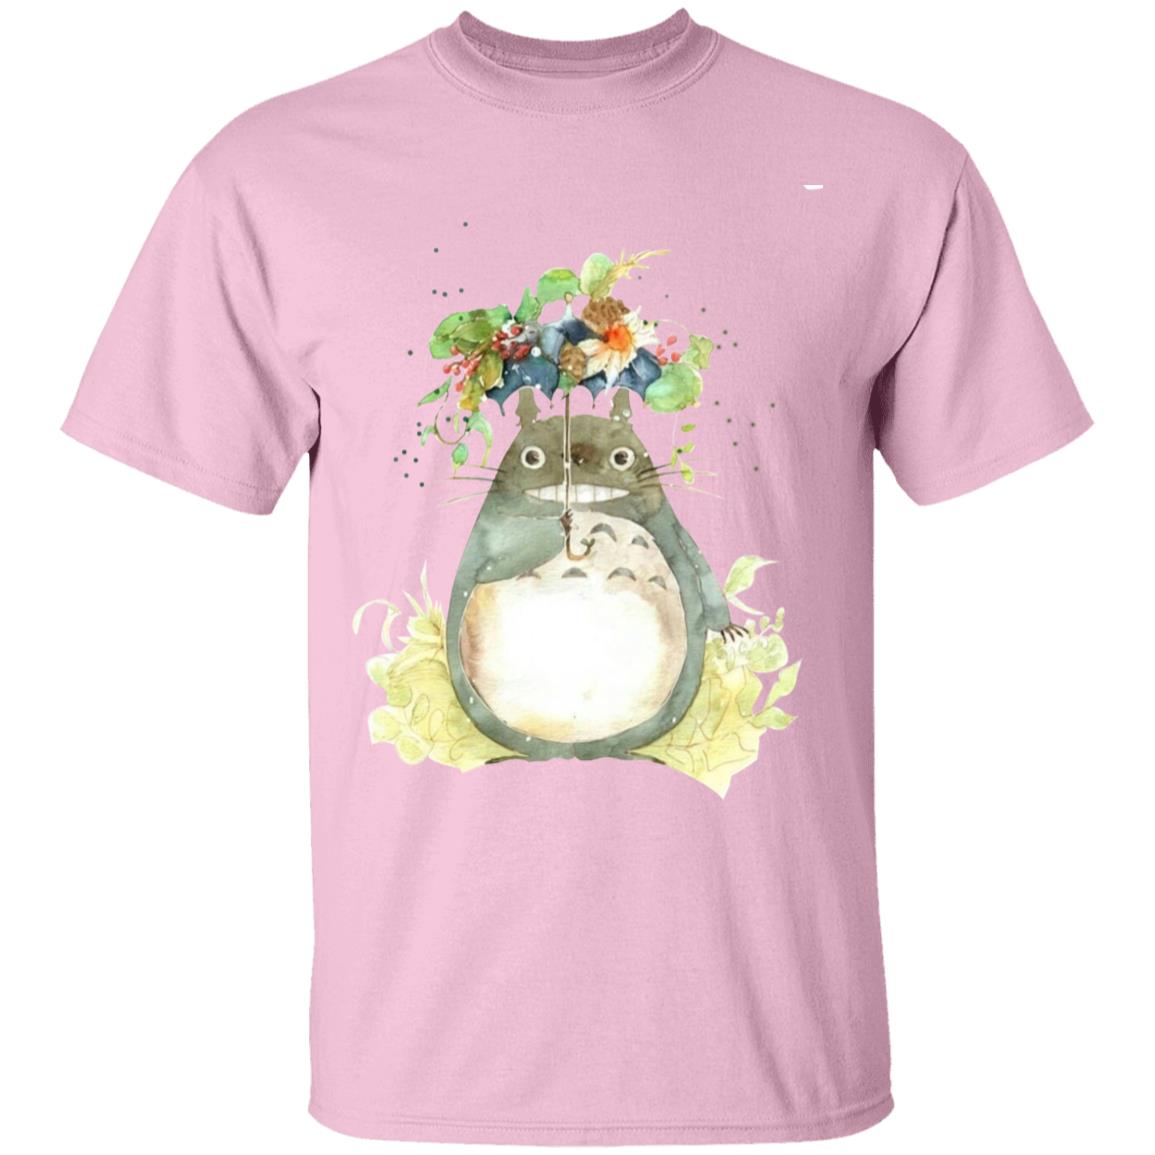 Totoro with Flower Umbrella T Shirt